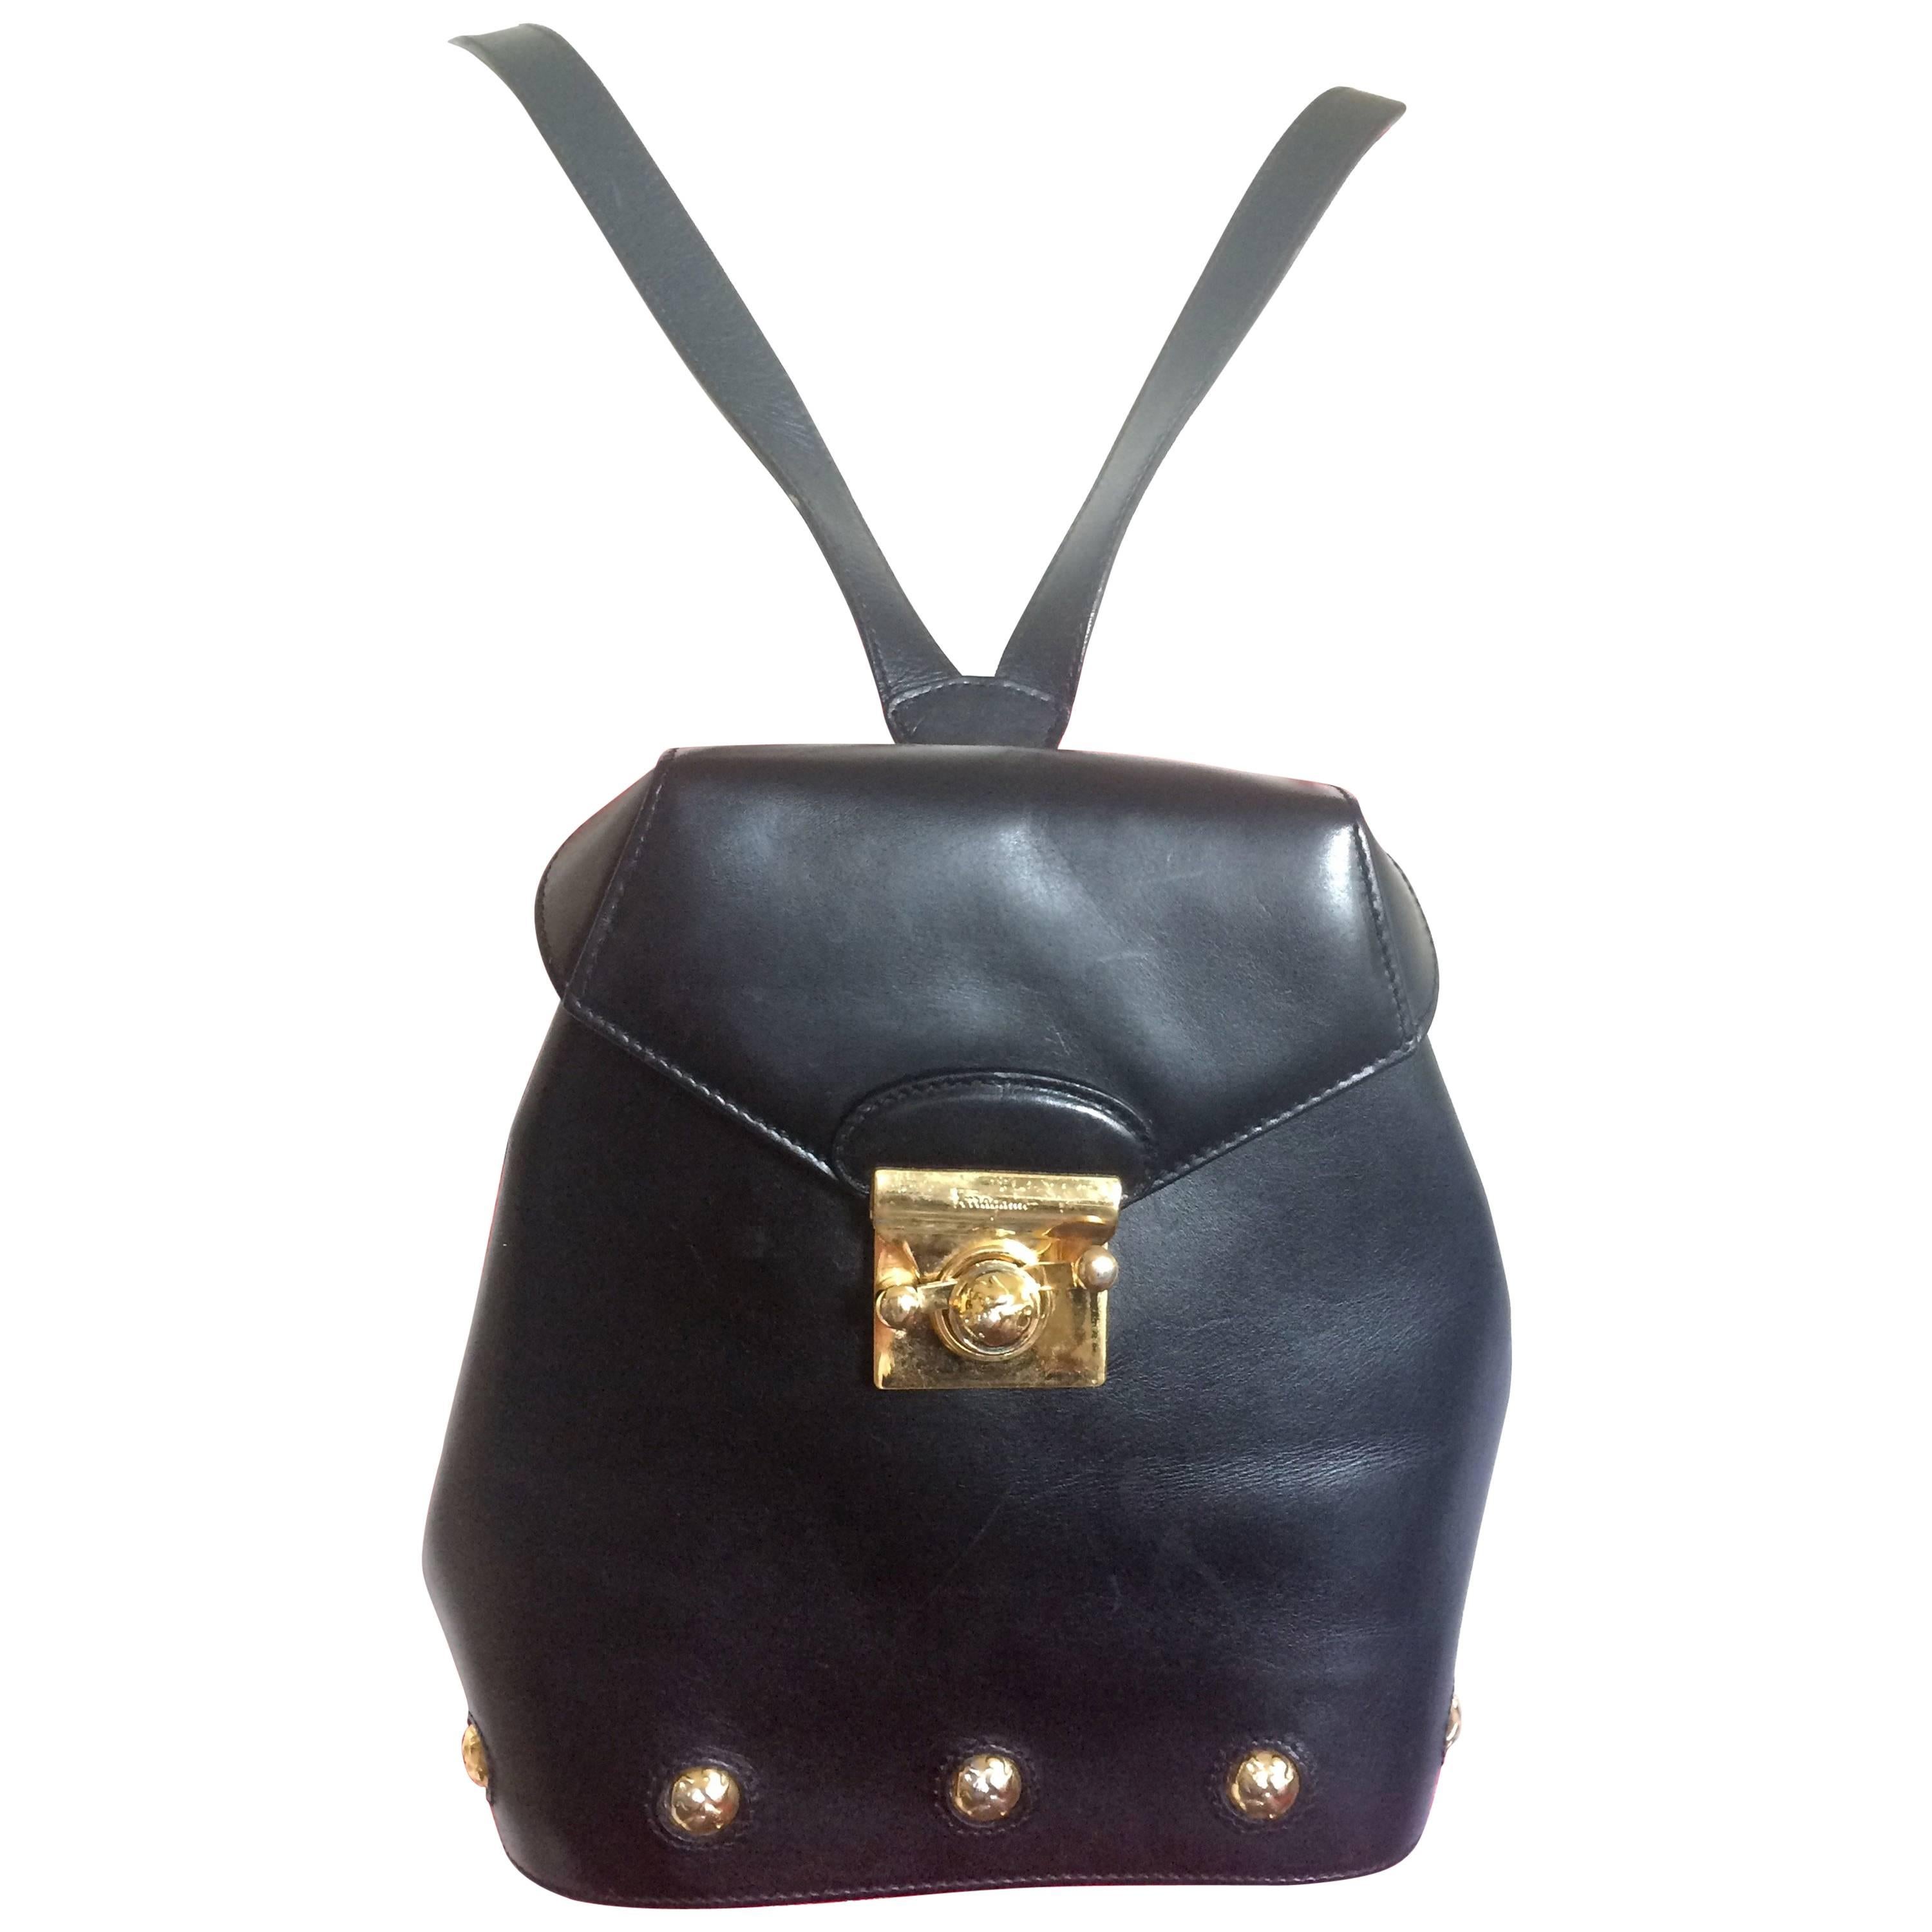 Vintage Salvatore Ferragamo black calf leather backpack with golden motif